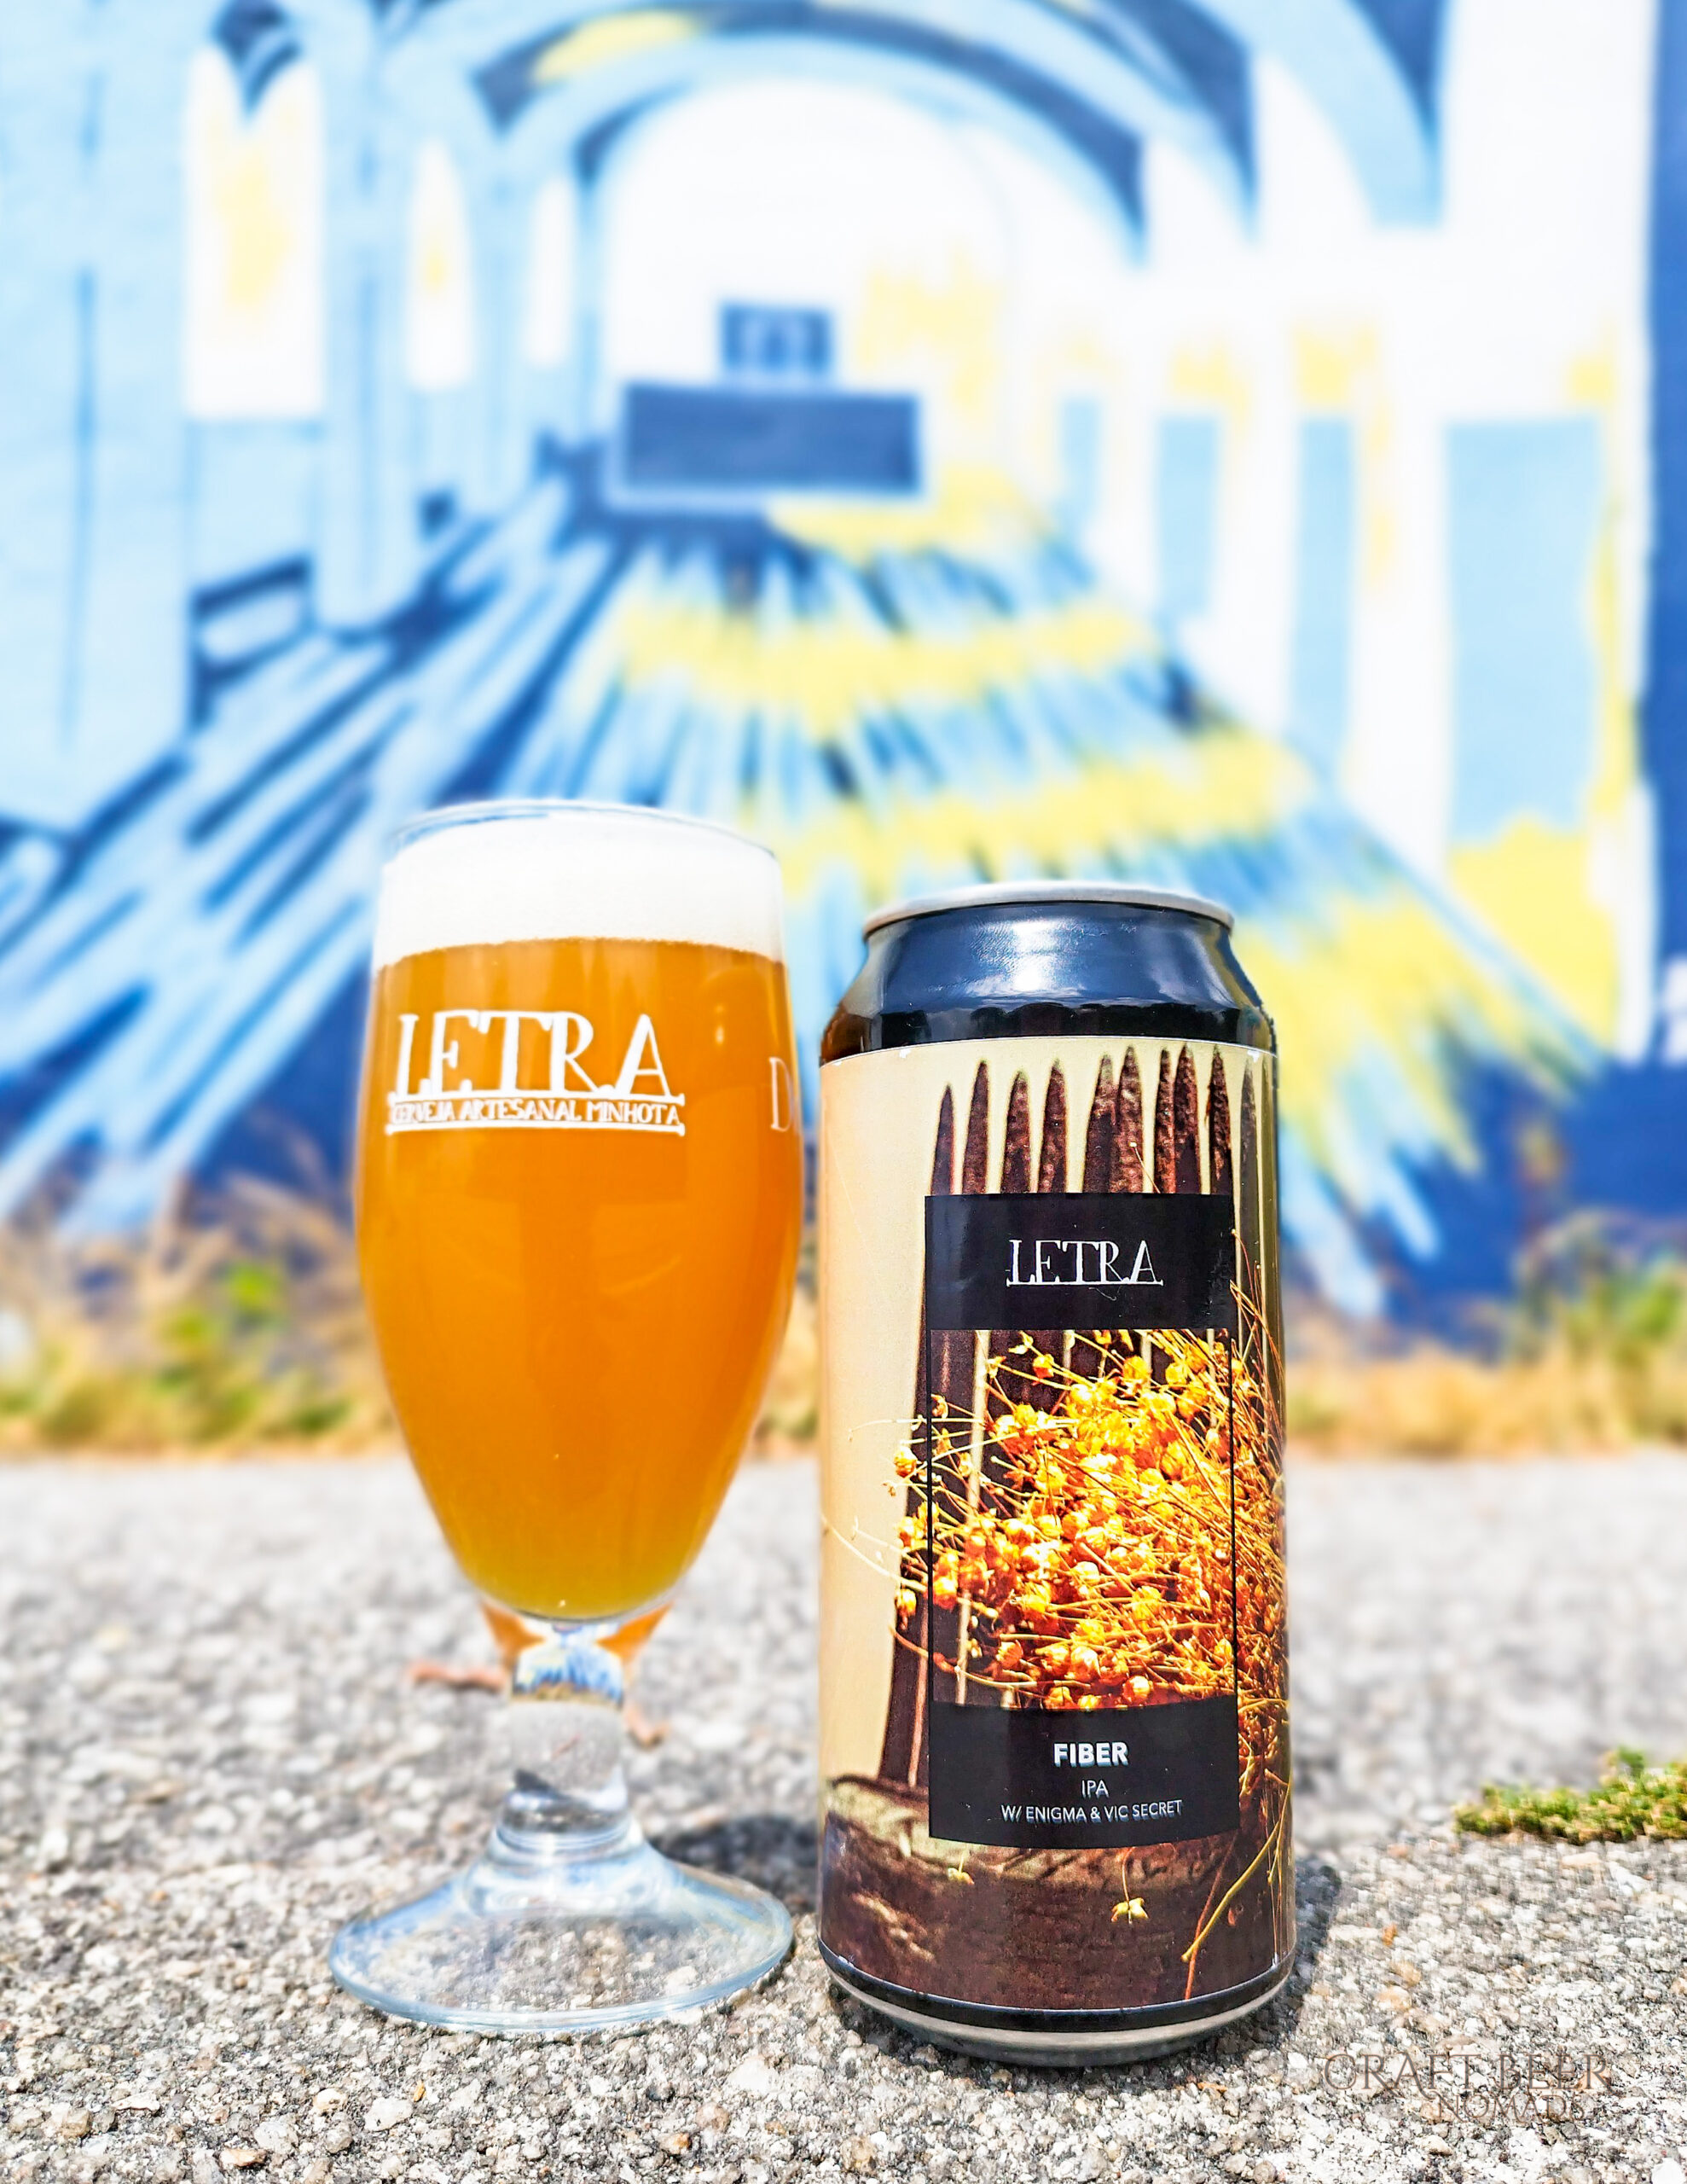 Letra Fiber IPA beer | Craft beer in Portugal: Letra Brewery | Craft Beer Nomads